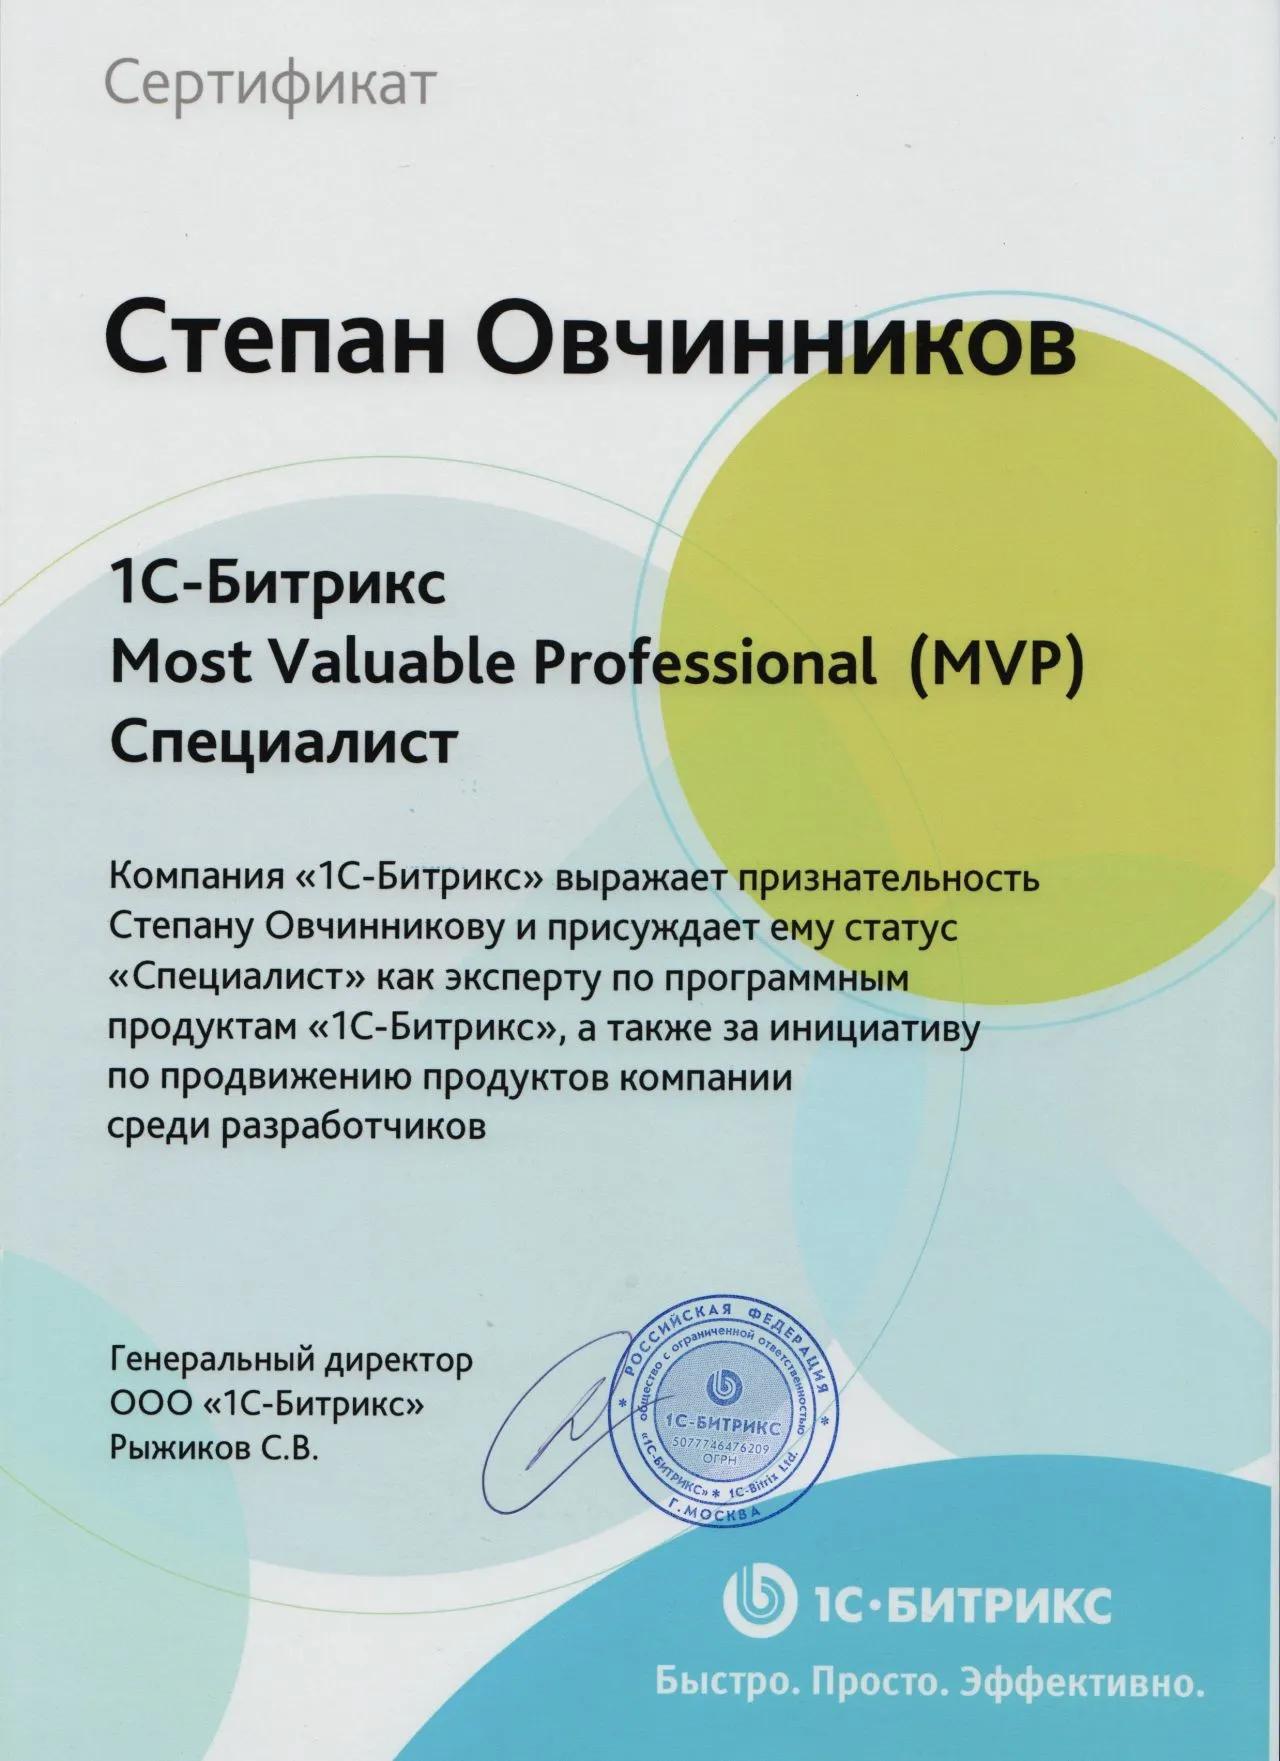 сертификат.jpg